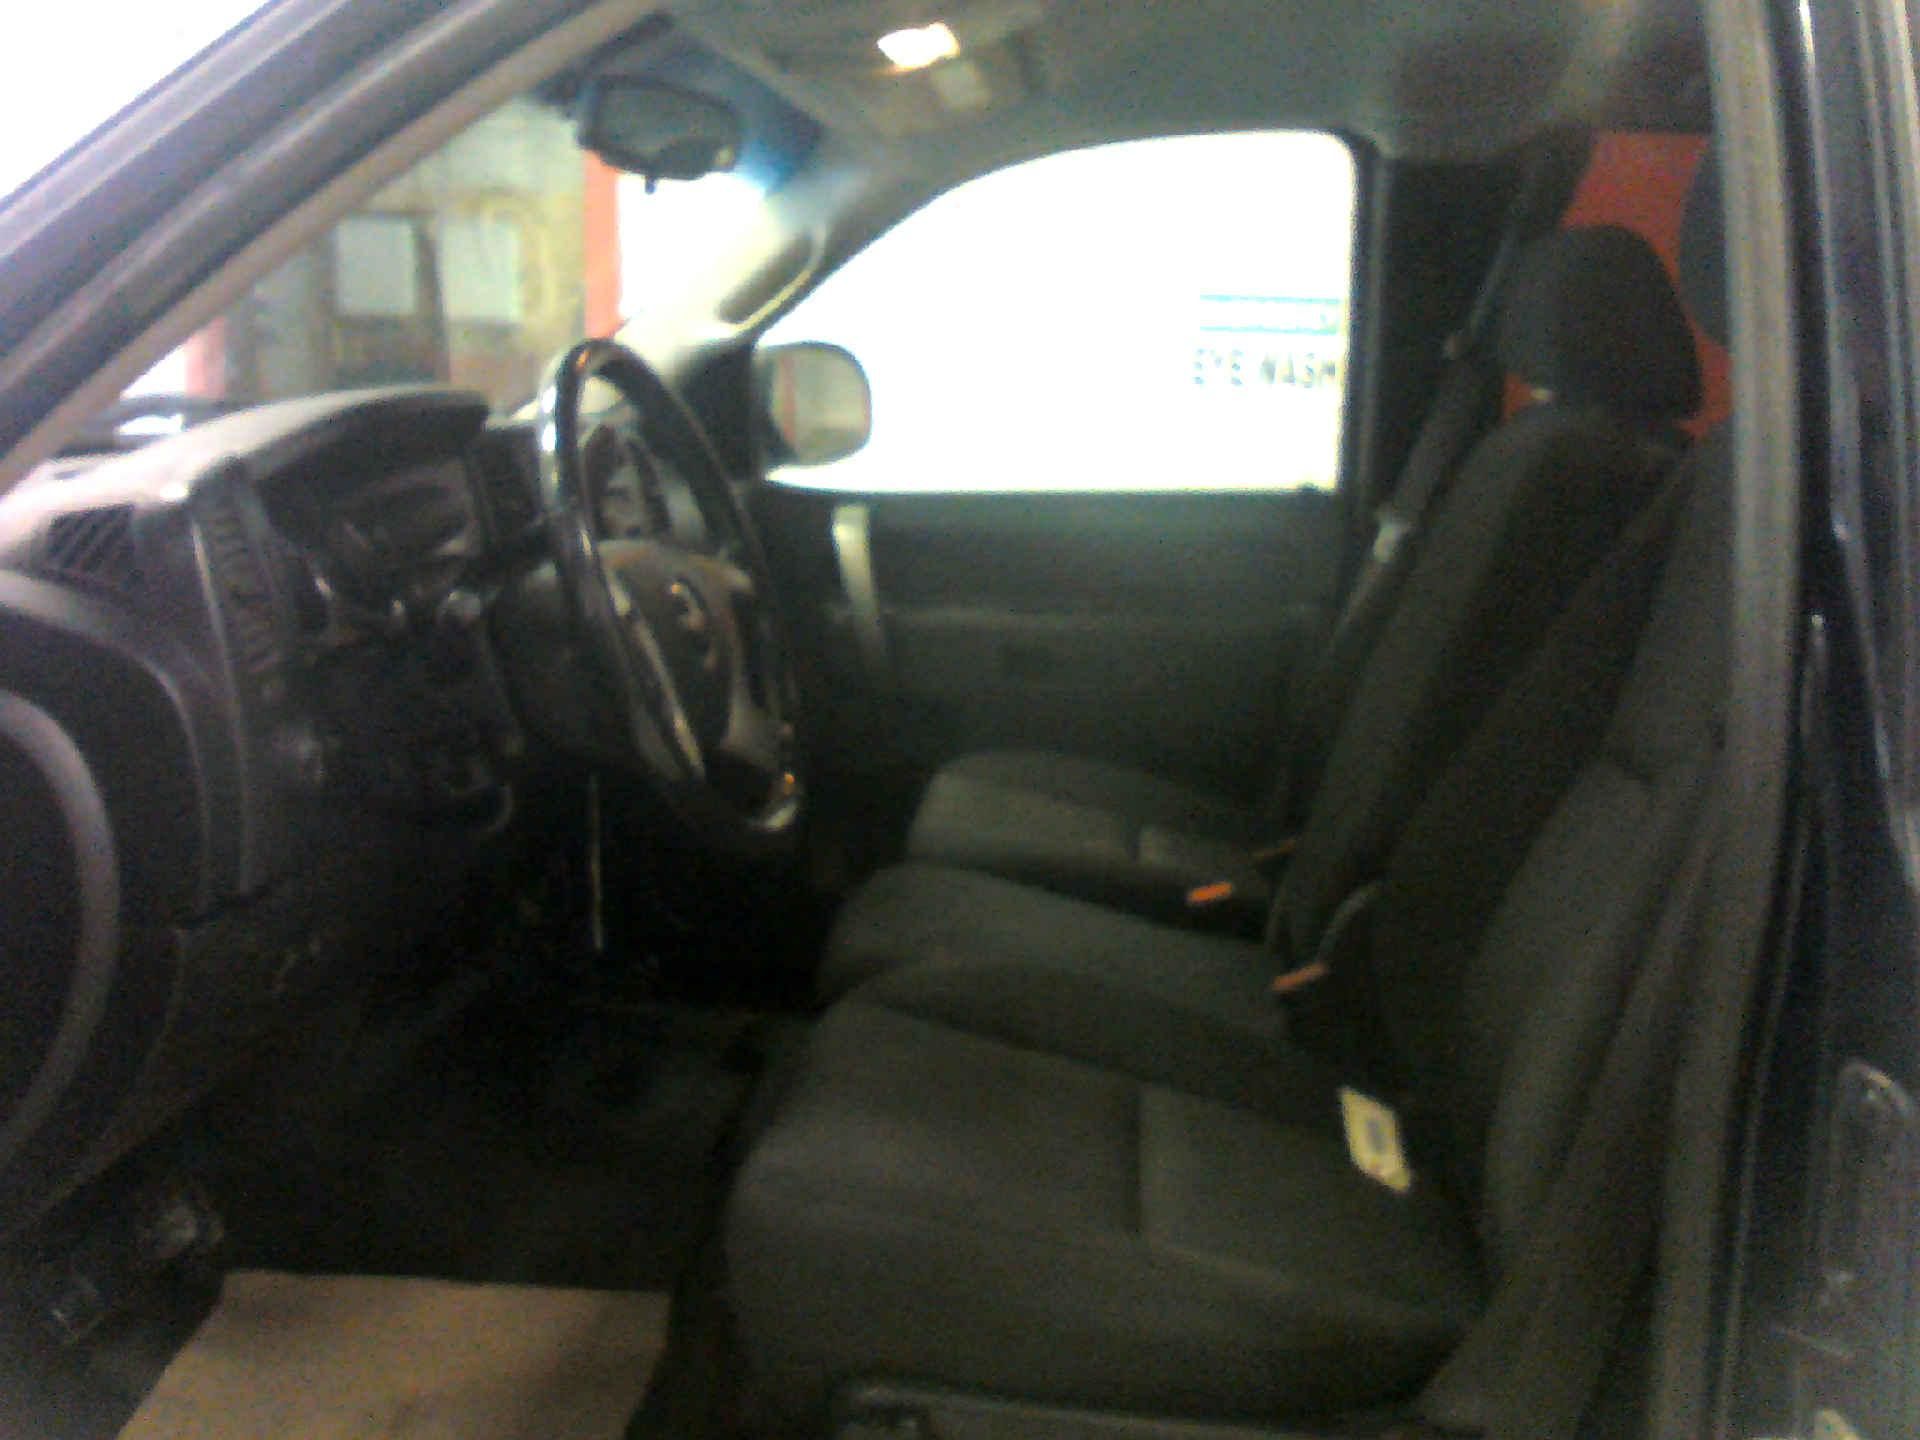 2012 GMC SIERRA 2500HD SLE EXT. CAB 4WD 6.0L V8 OHV 16V FFV AUTOMATIC SN:1GT220CG7CZ179276 OPTIONS: - Image 5 of 9